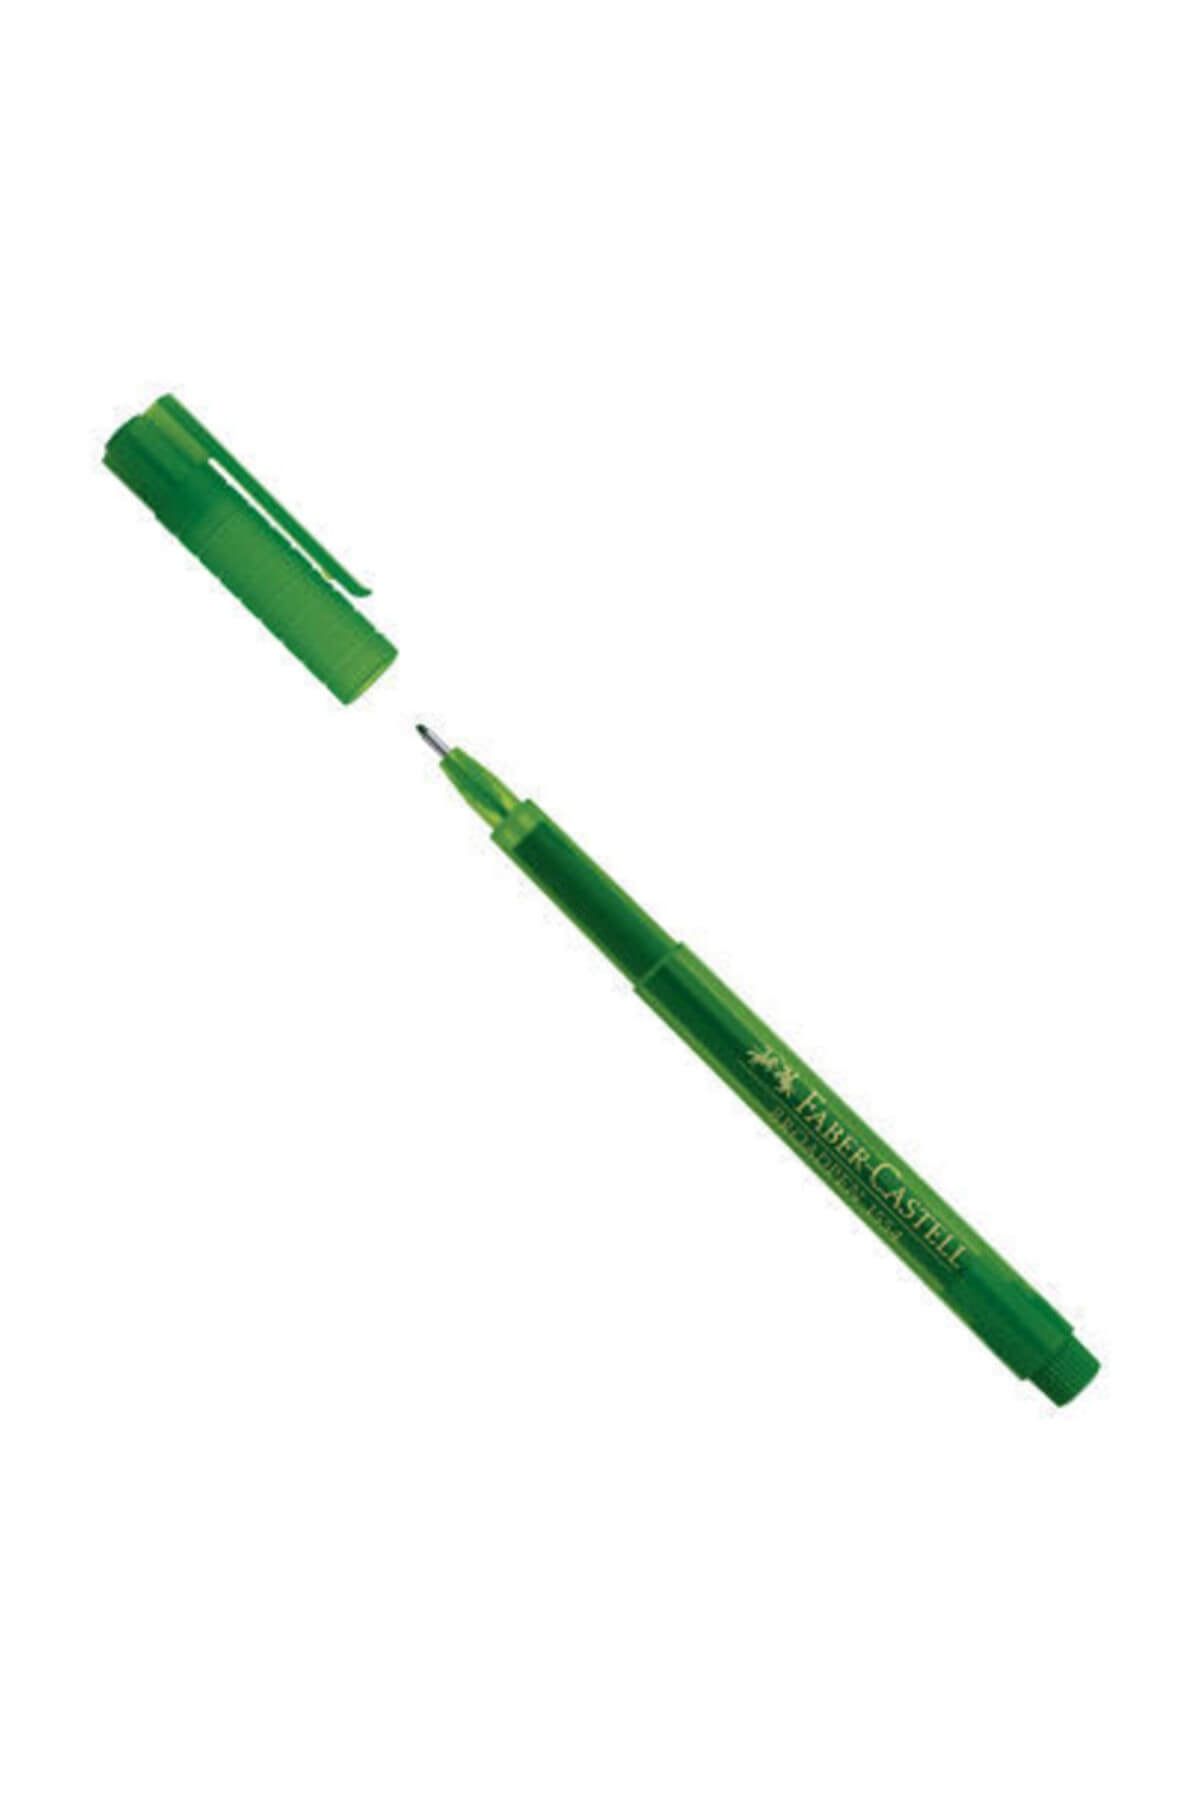 Faber Castell Yeşil Broadpen 1554 Kalın Uçlu Kalem 0.8 mm